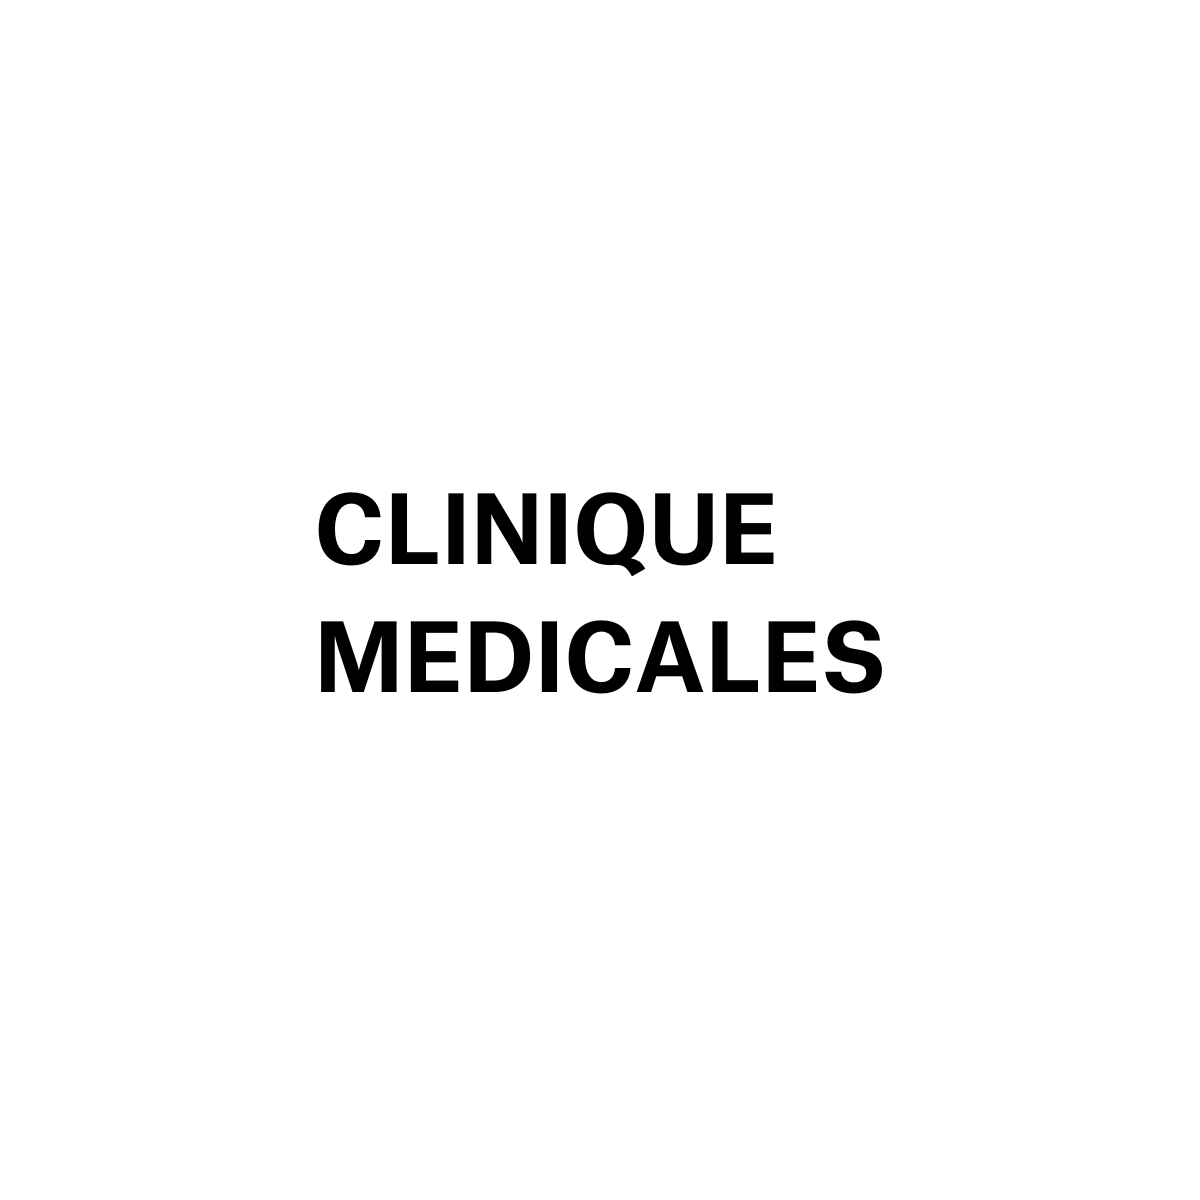 Clinique medicales